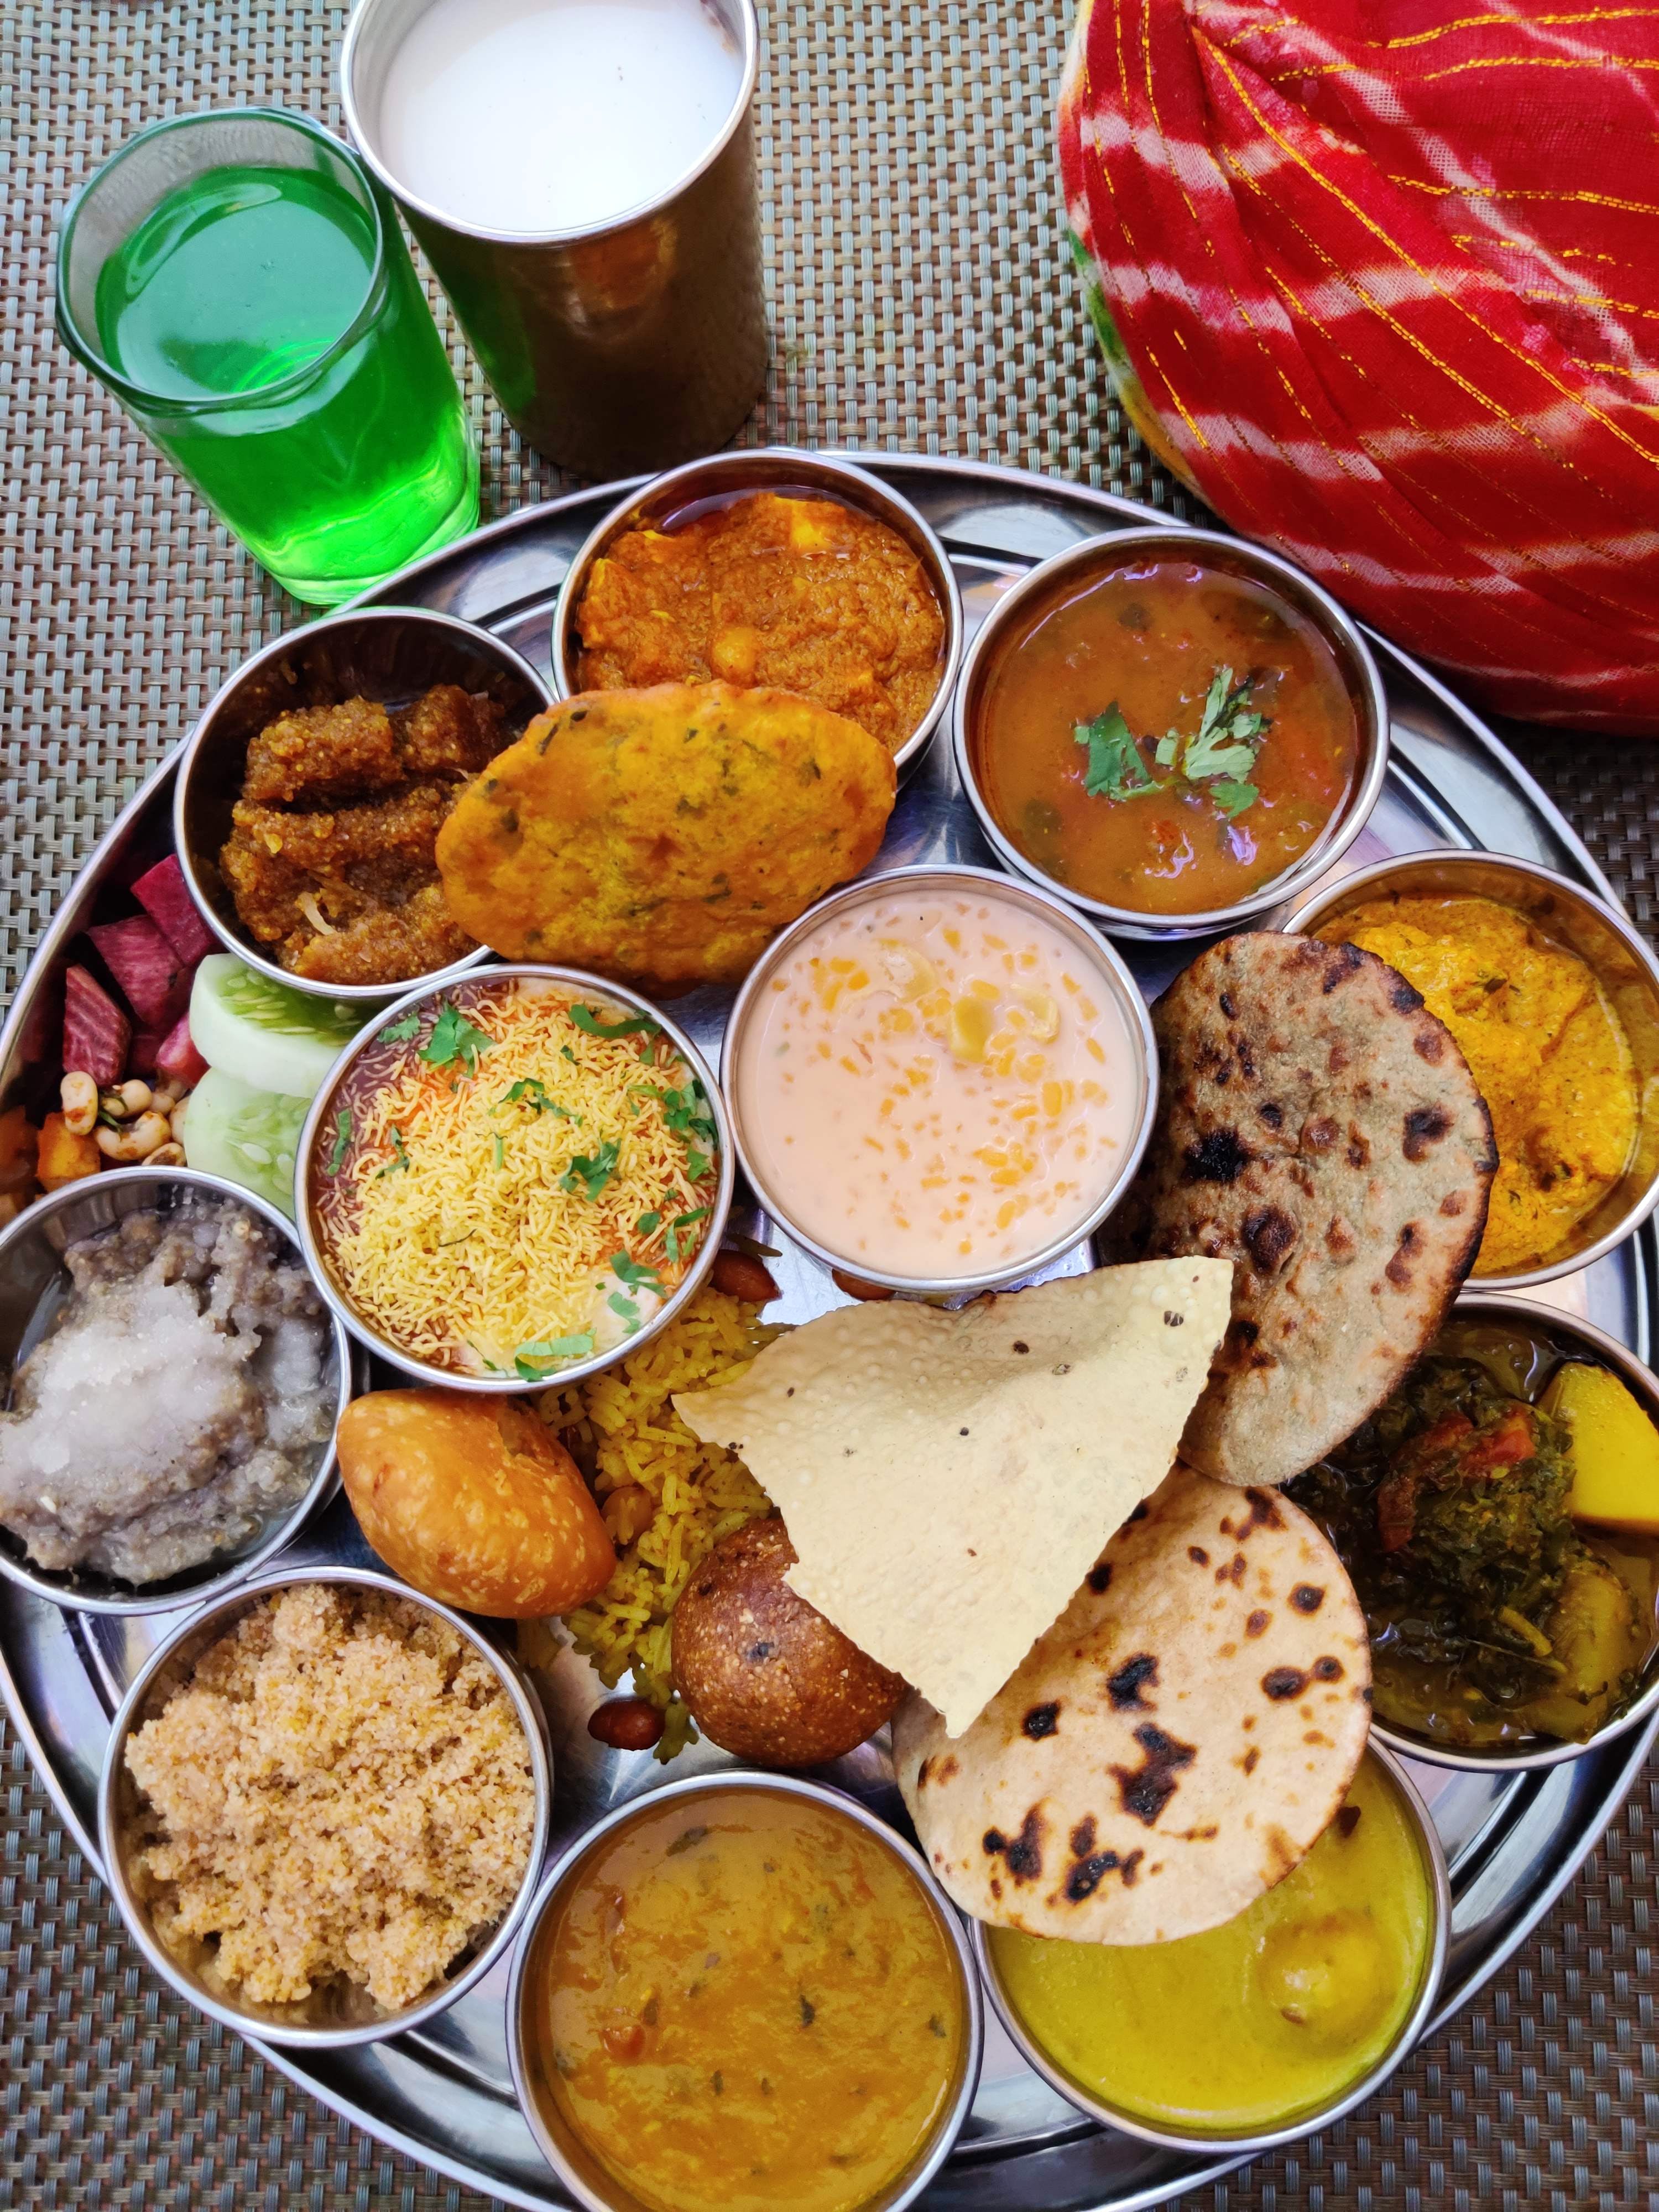 Dish,Food,Cuisine,Ingredient,Meal,Raita,Punjabi cuisine,Indian cuisine,Dal,Sindhi cuisine